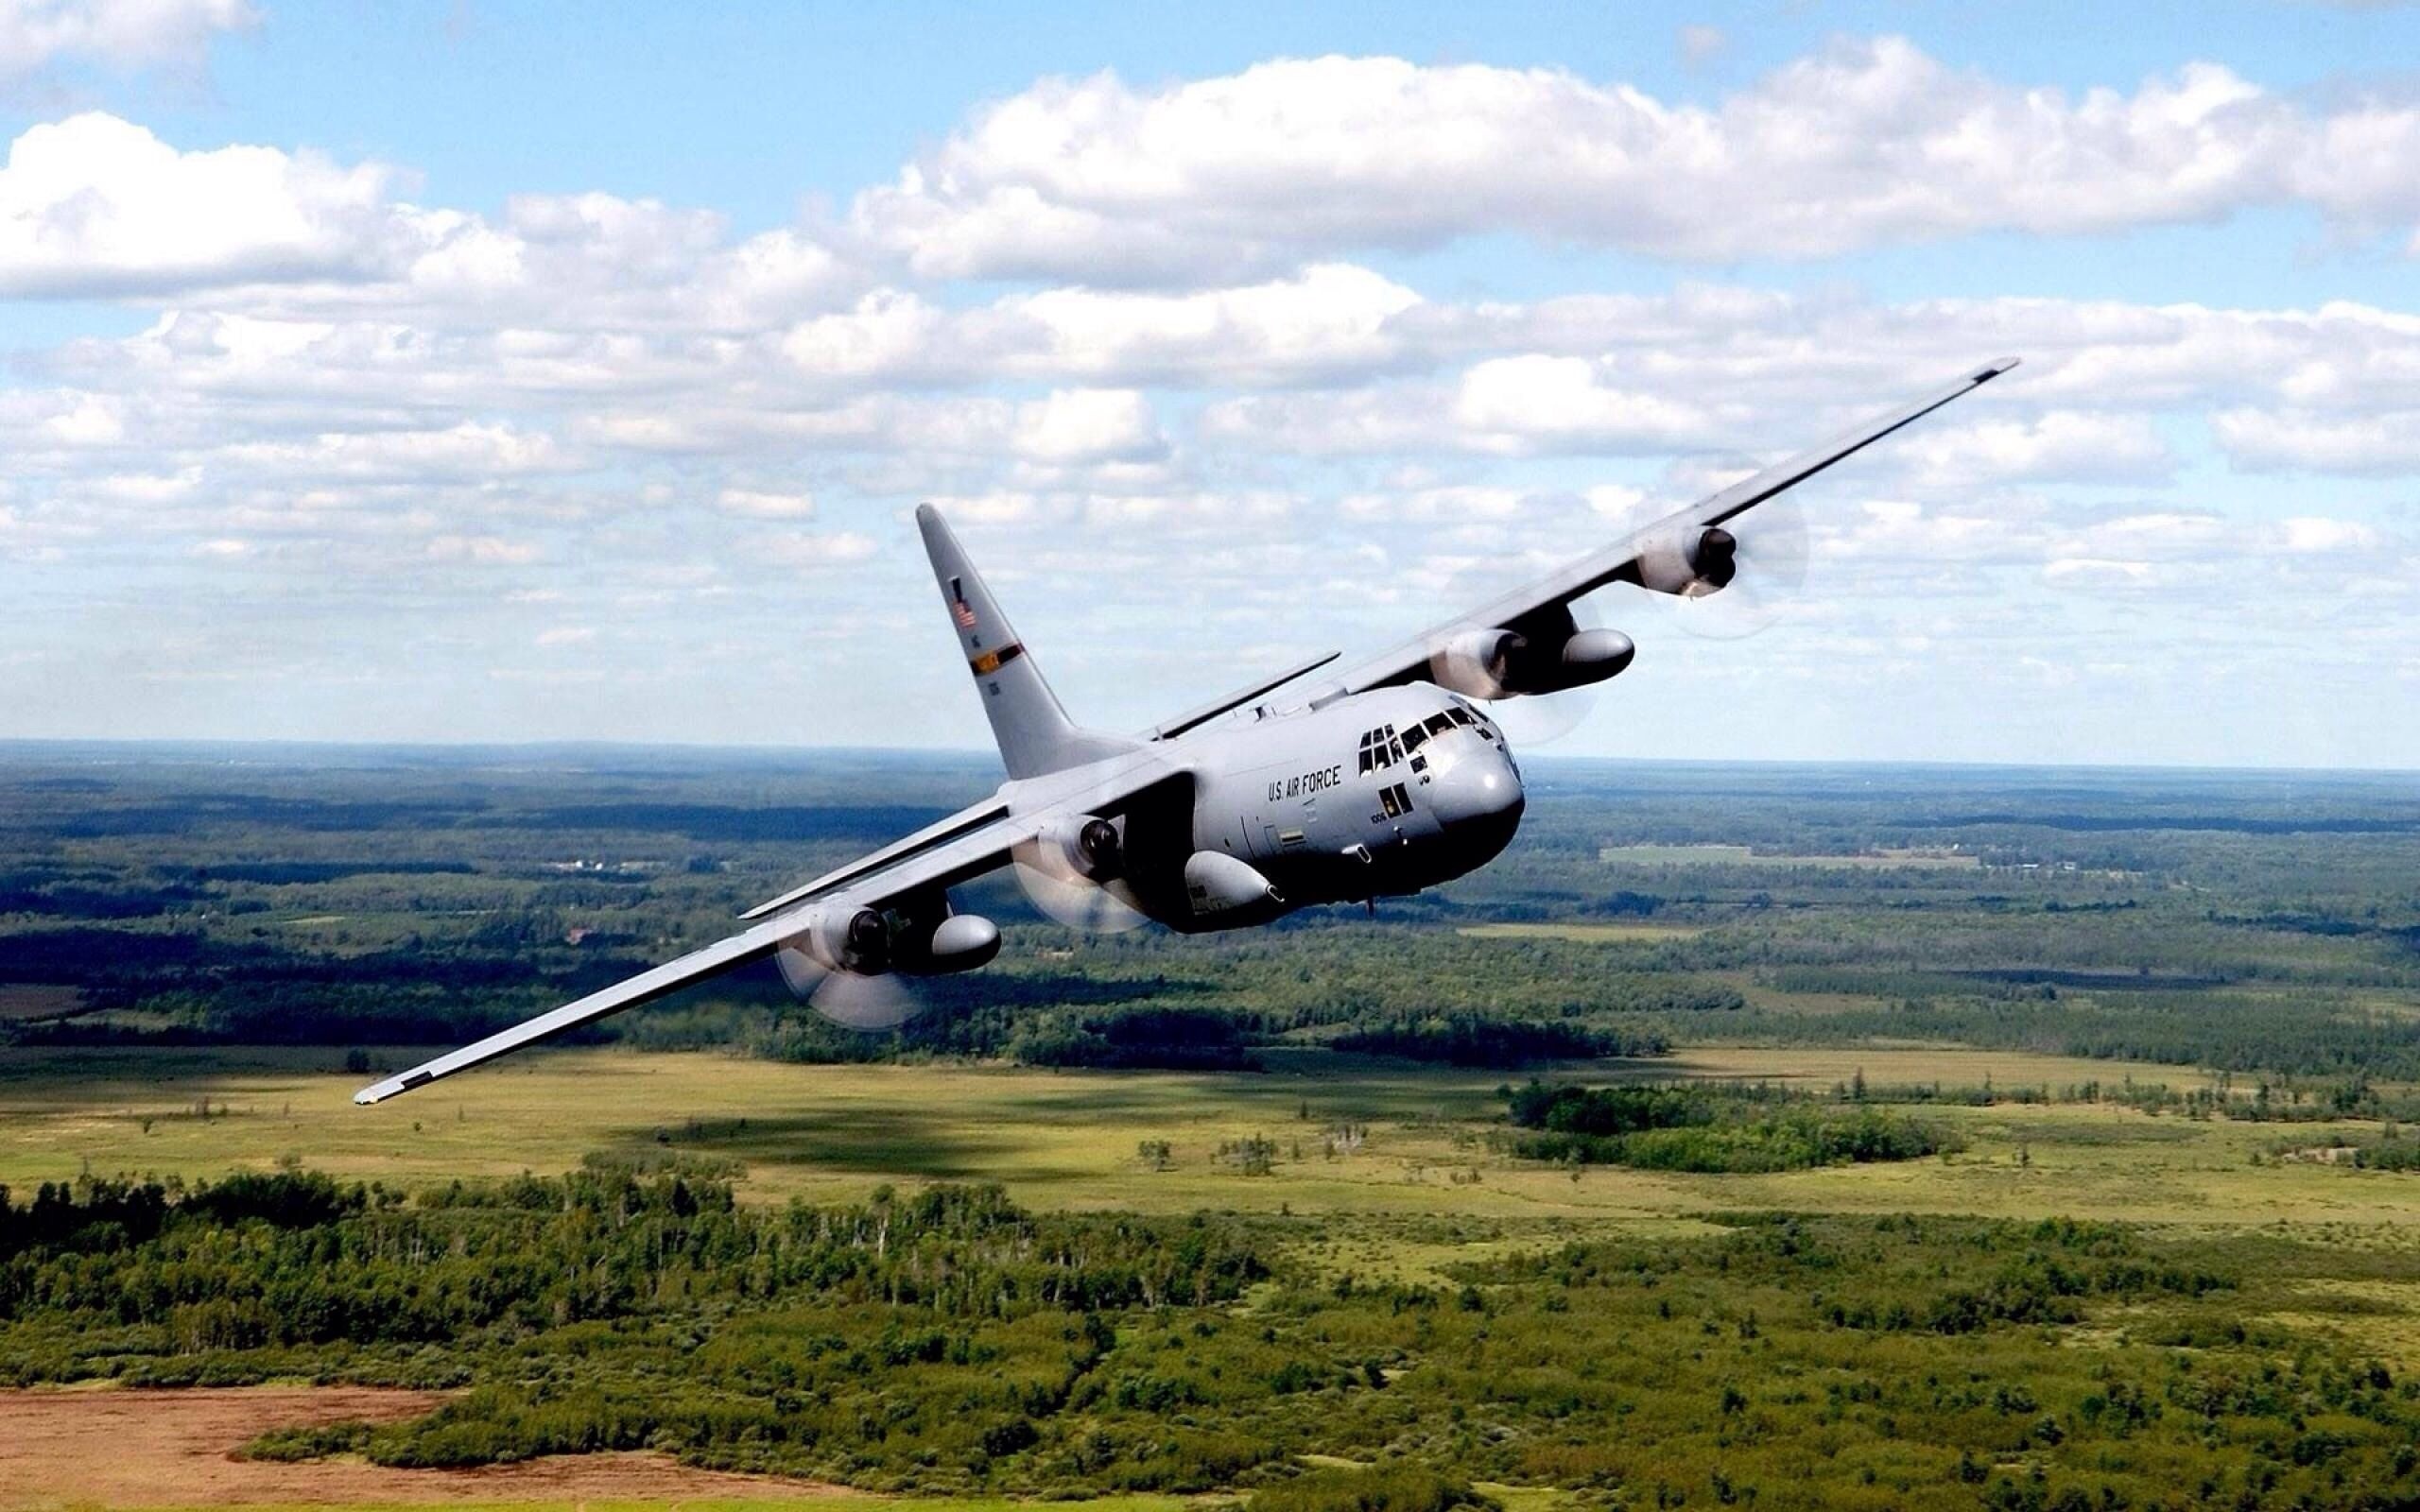 Lockheed C-130 Hercules, Transport aircraft, Air Force wallpaper, Fighter jets, 2560x1600 HD Desktop